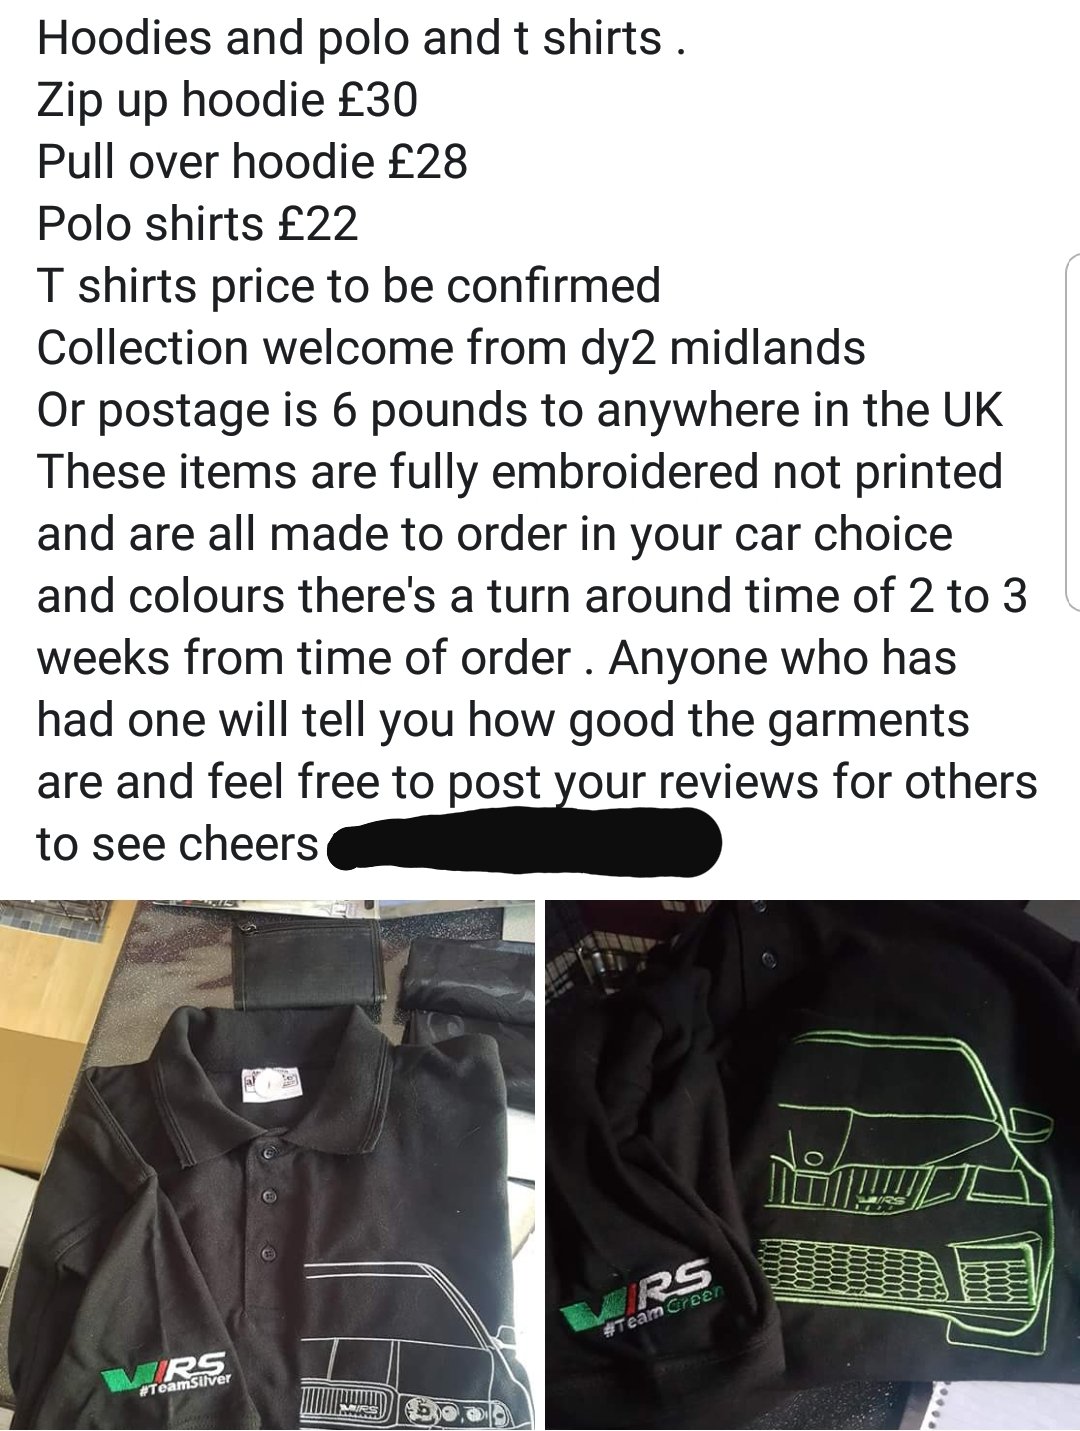 Vrs polo shirts and hoodies - Non Automotive Items - BRISKODA